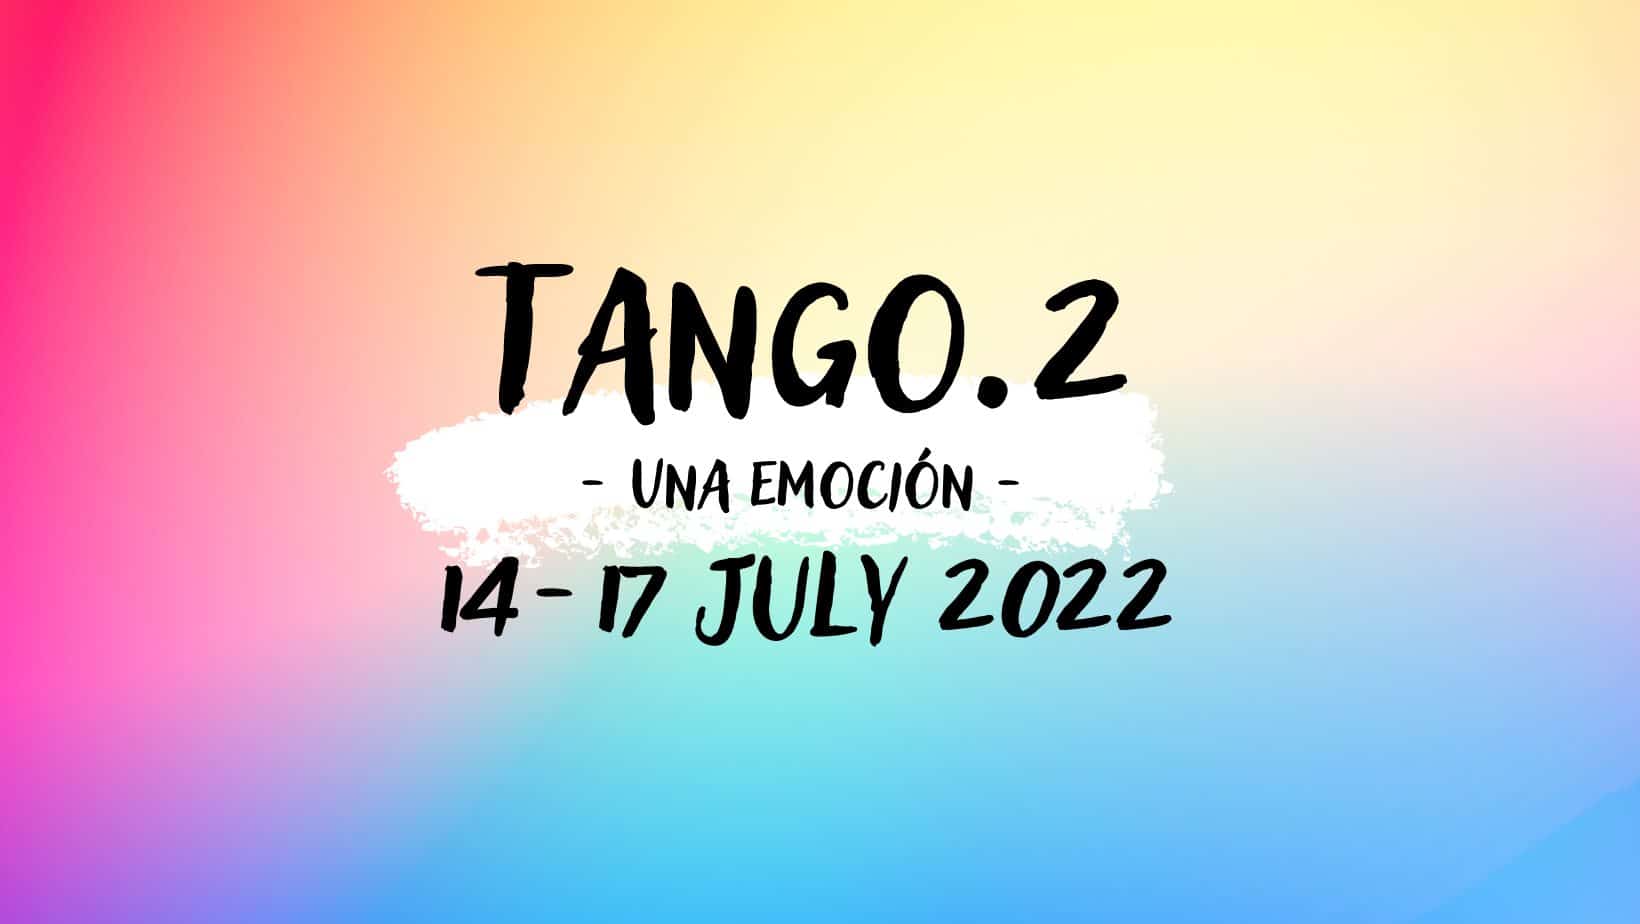 Tango.2 Tango Festival 2022 – Una emoción preview picture